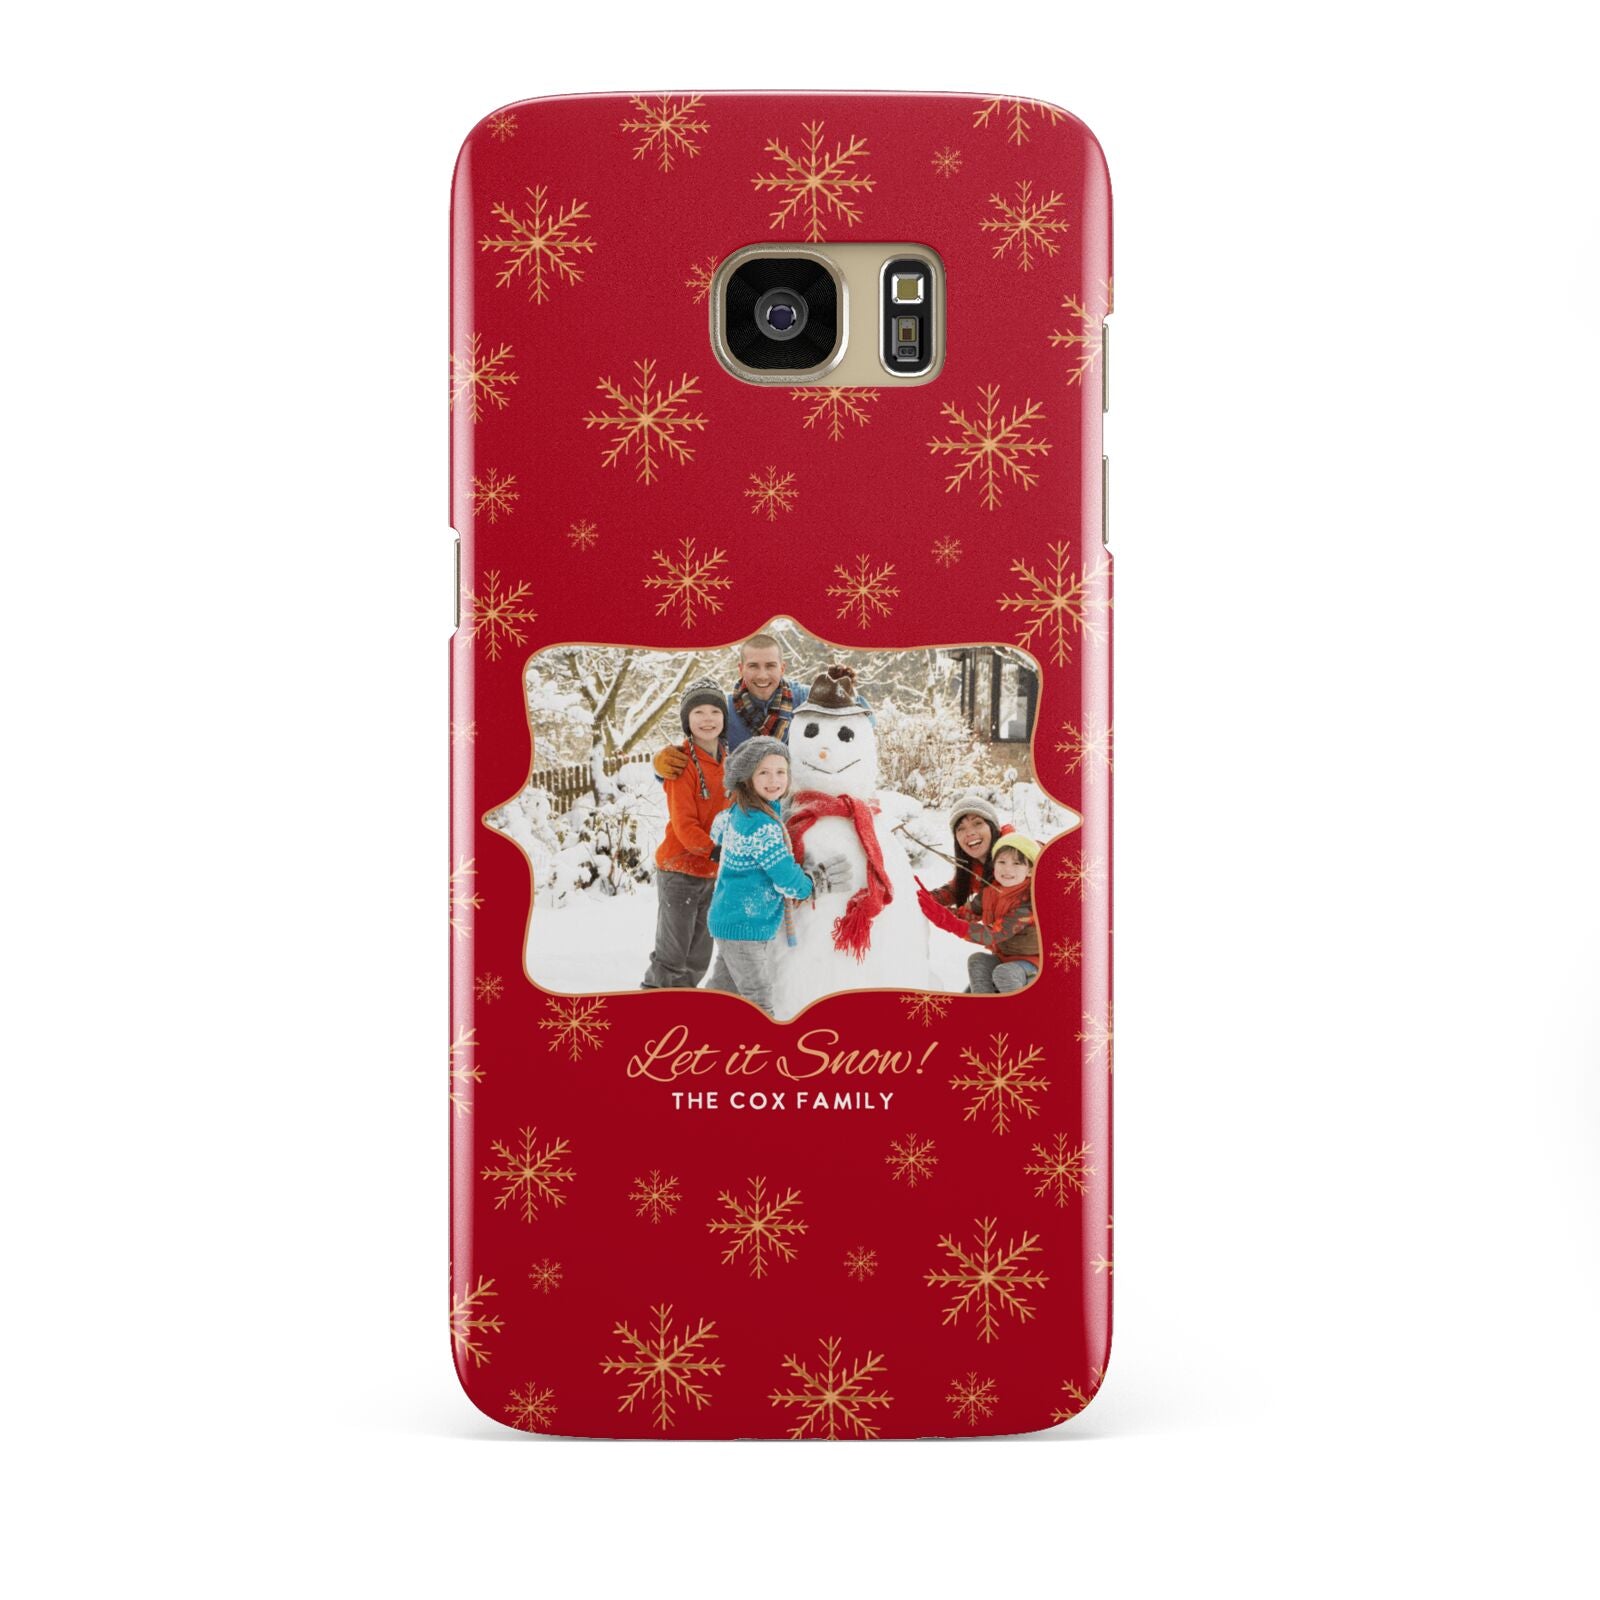 Let it Snow Christmas Photo Upload Samsung Galaxy S7 Edge Case